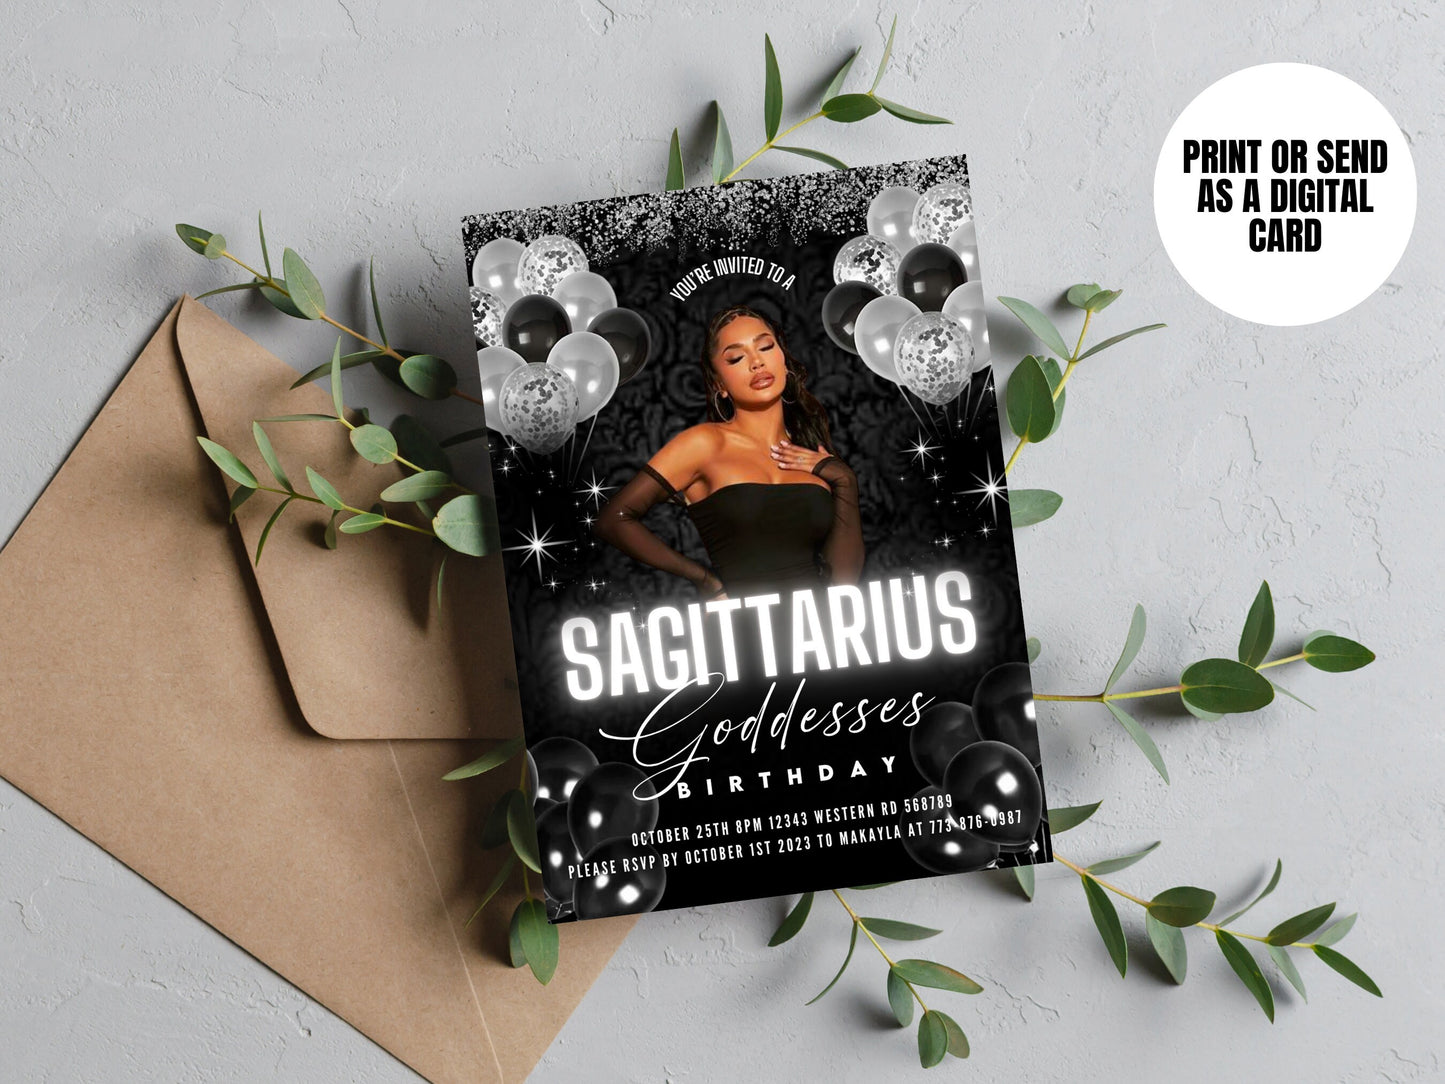 Sagittarius Season Black | Zodiac Horoscope Birthday Party Invitation | Canva Template | Fully Editable Printable or Digital Invite |